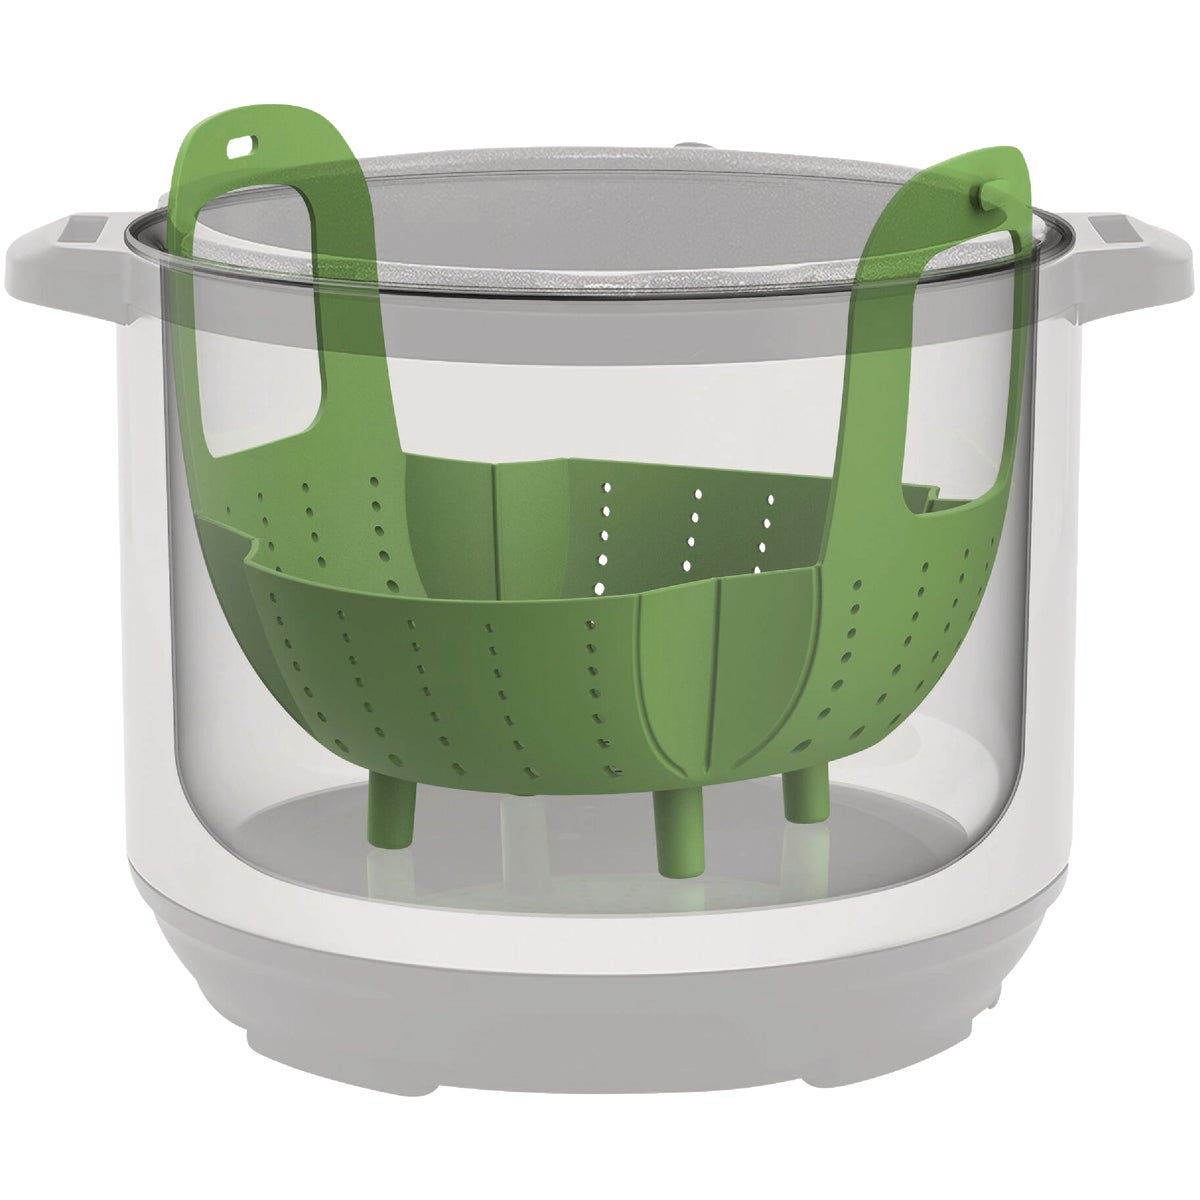 Instant Pot Green Silicone Steamer Basket with Interlocking